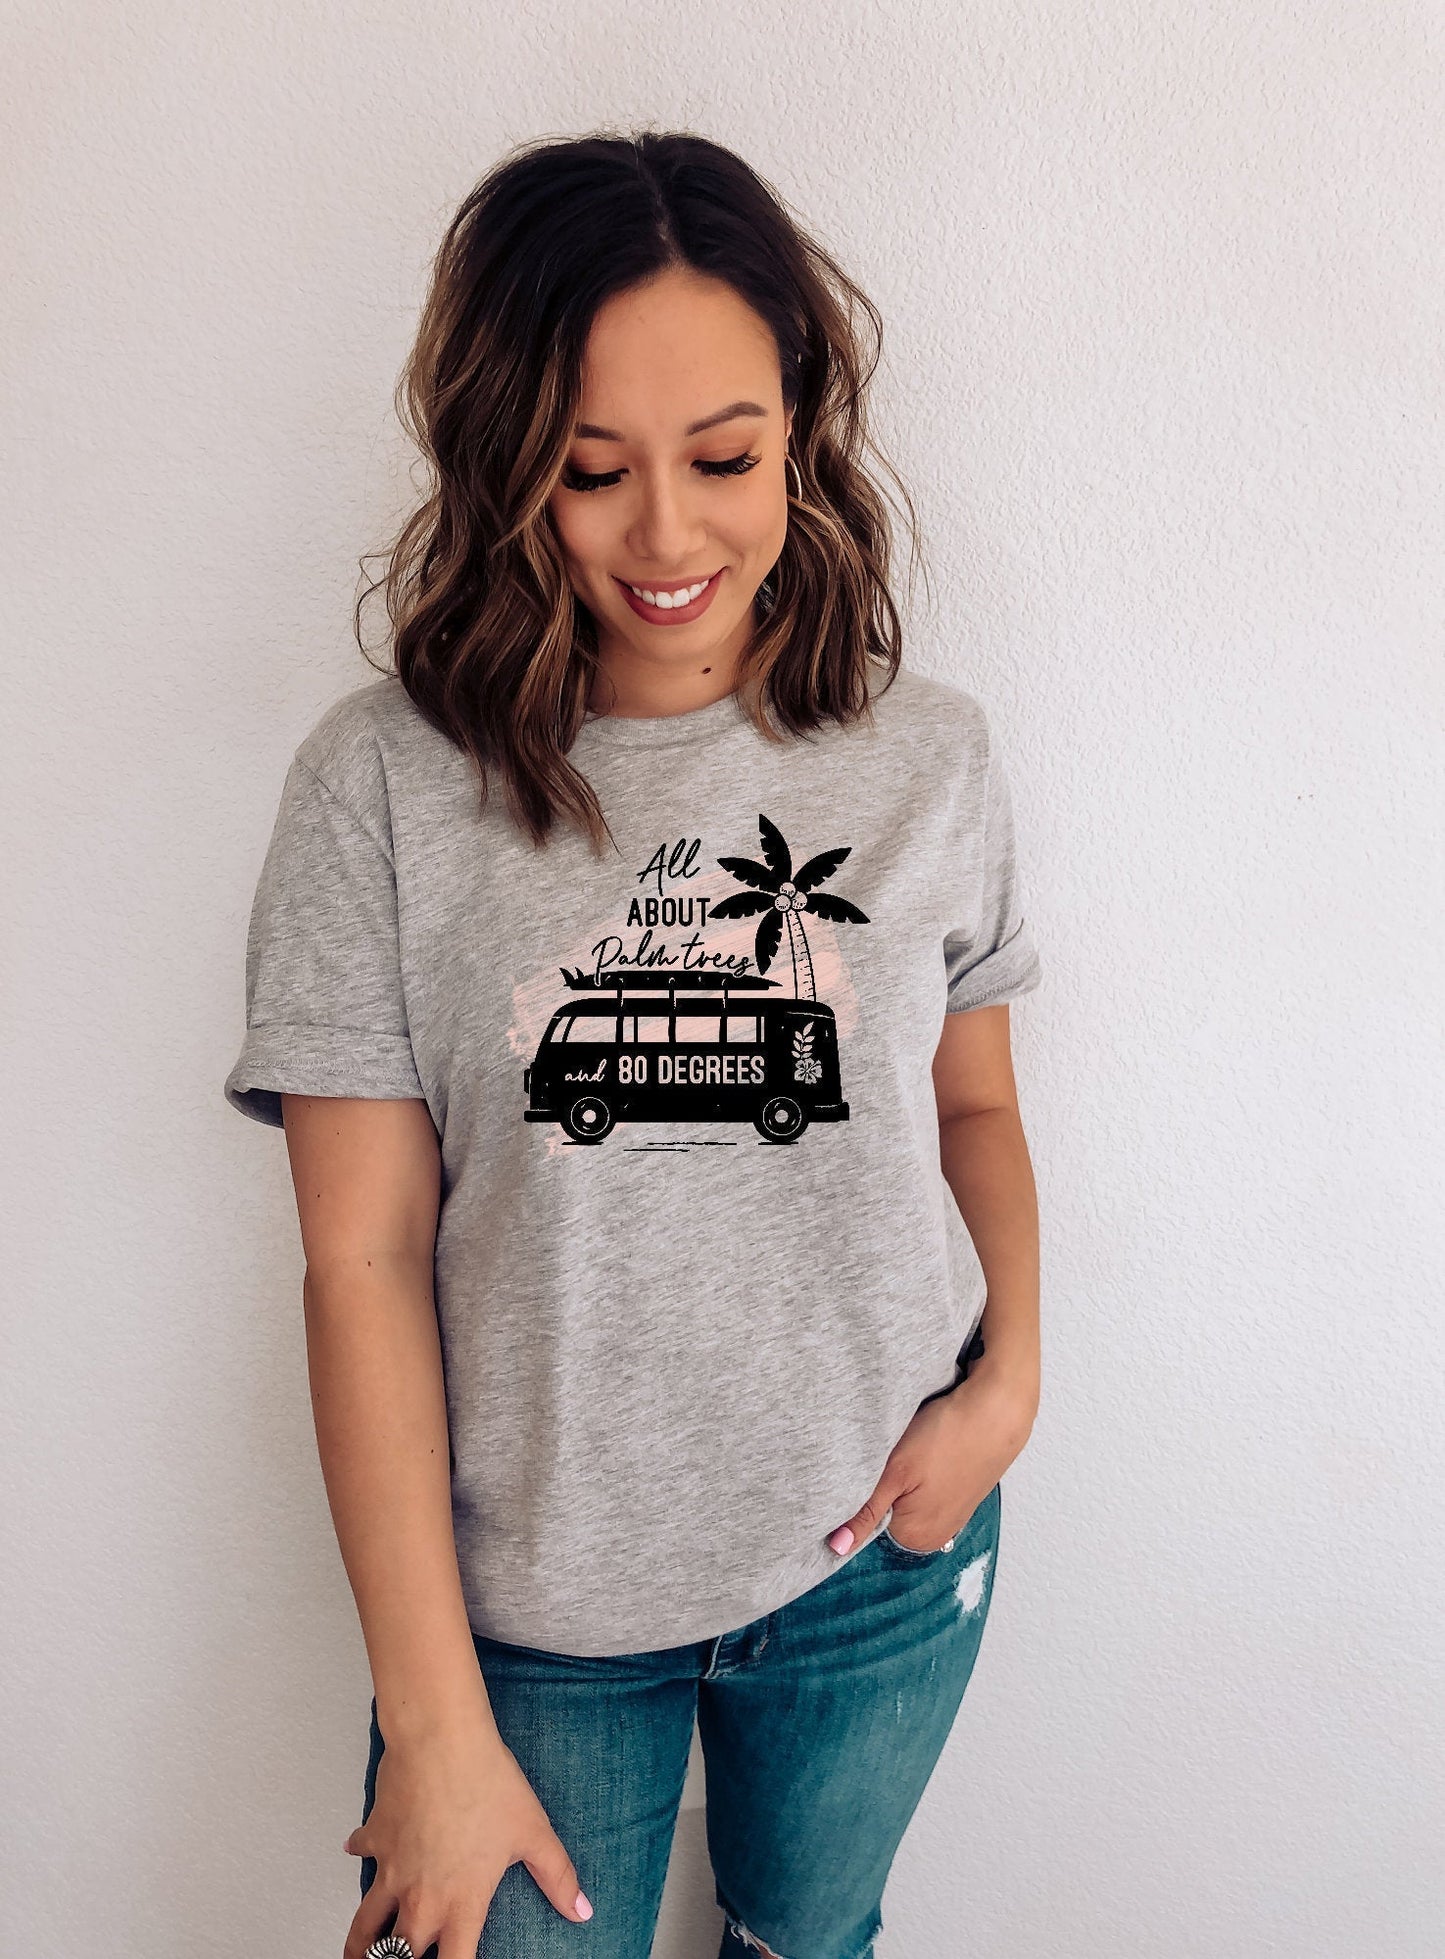 All About Palm Trees and 80 Degrees Shirt, Vacation Tee, Beach Tshirt, Girls Trip Shirt, Vacay Mode, Road Trip Shirt - Premium Shirts - Just $21.50! Shop now at Nine Thirty Nine Design